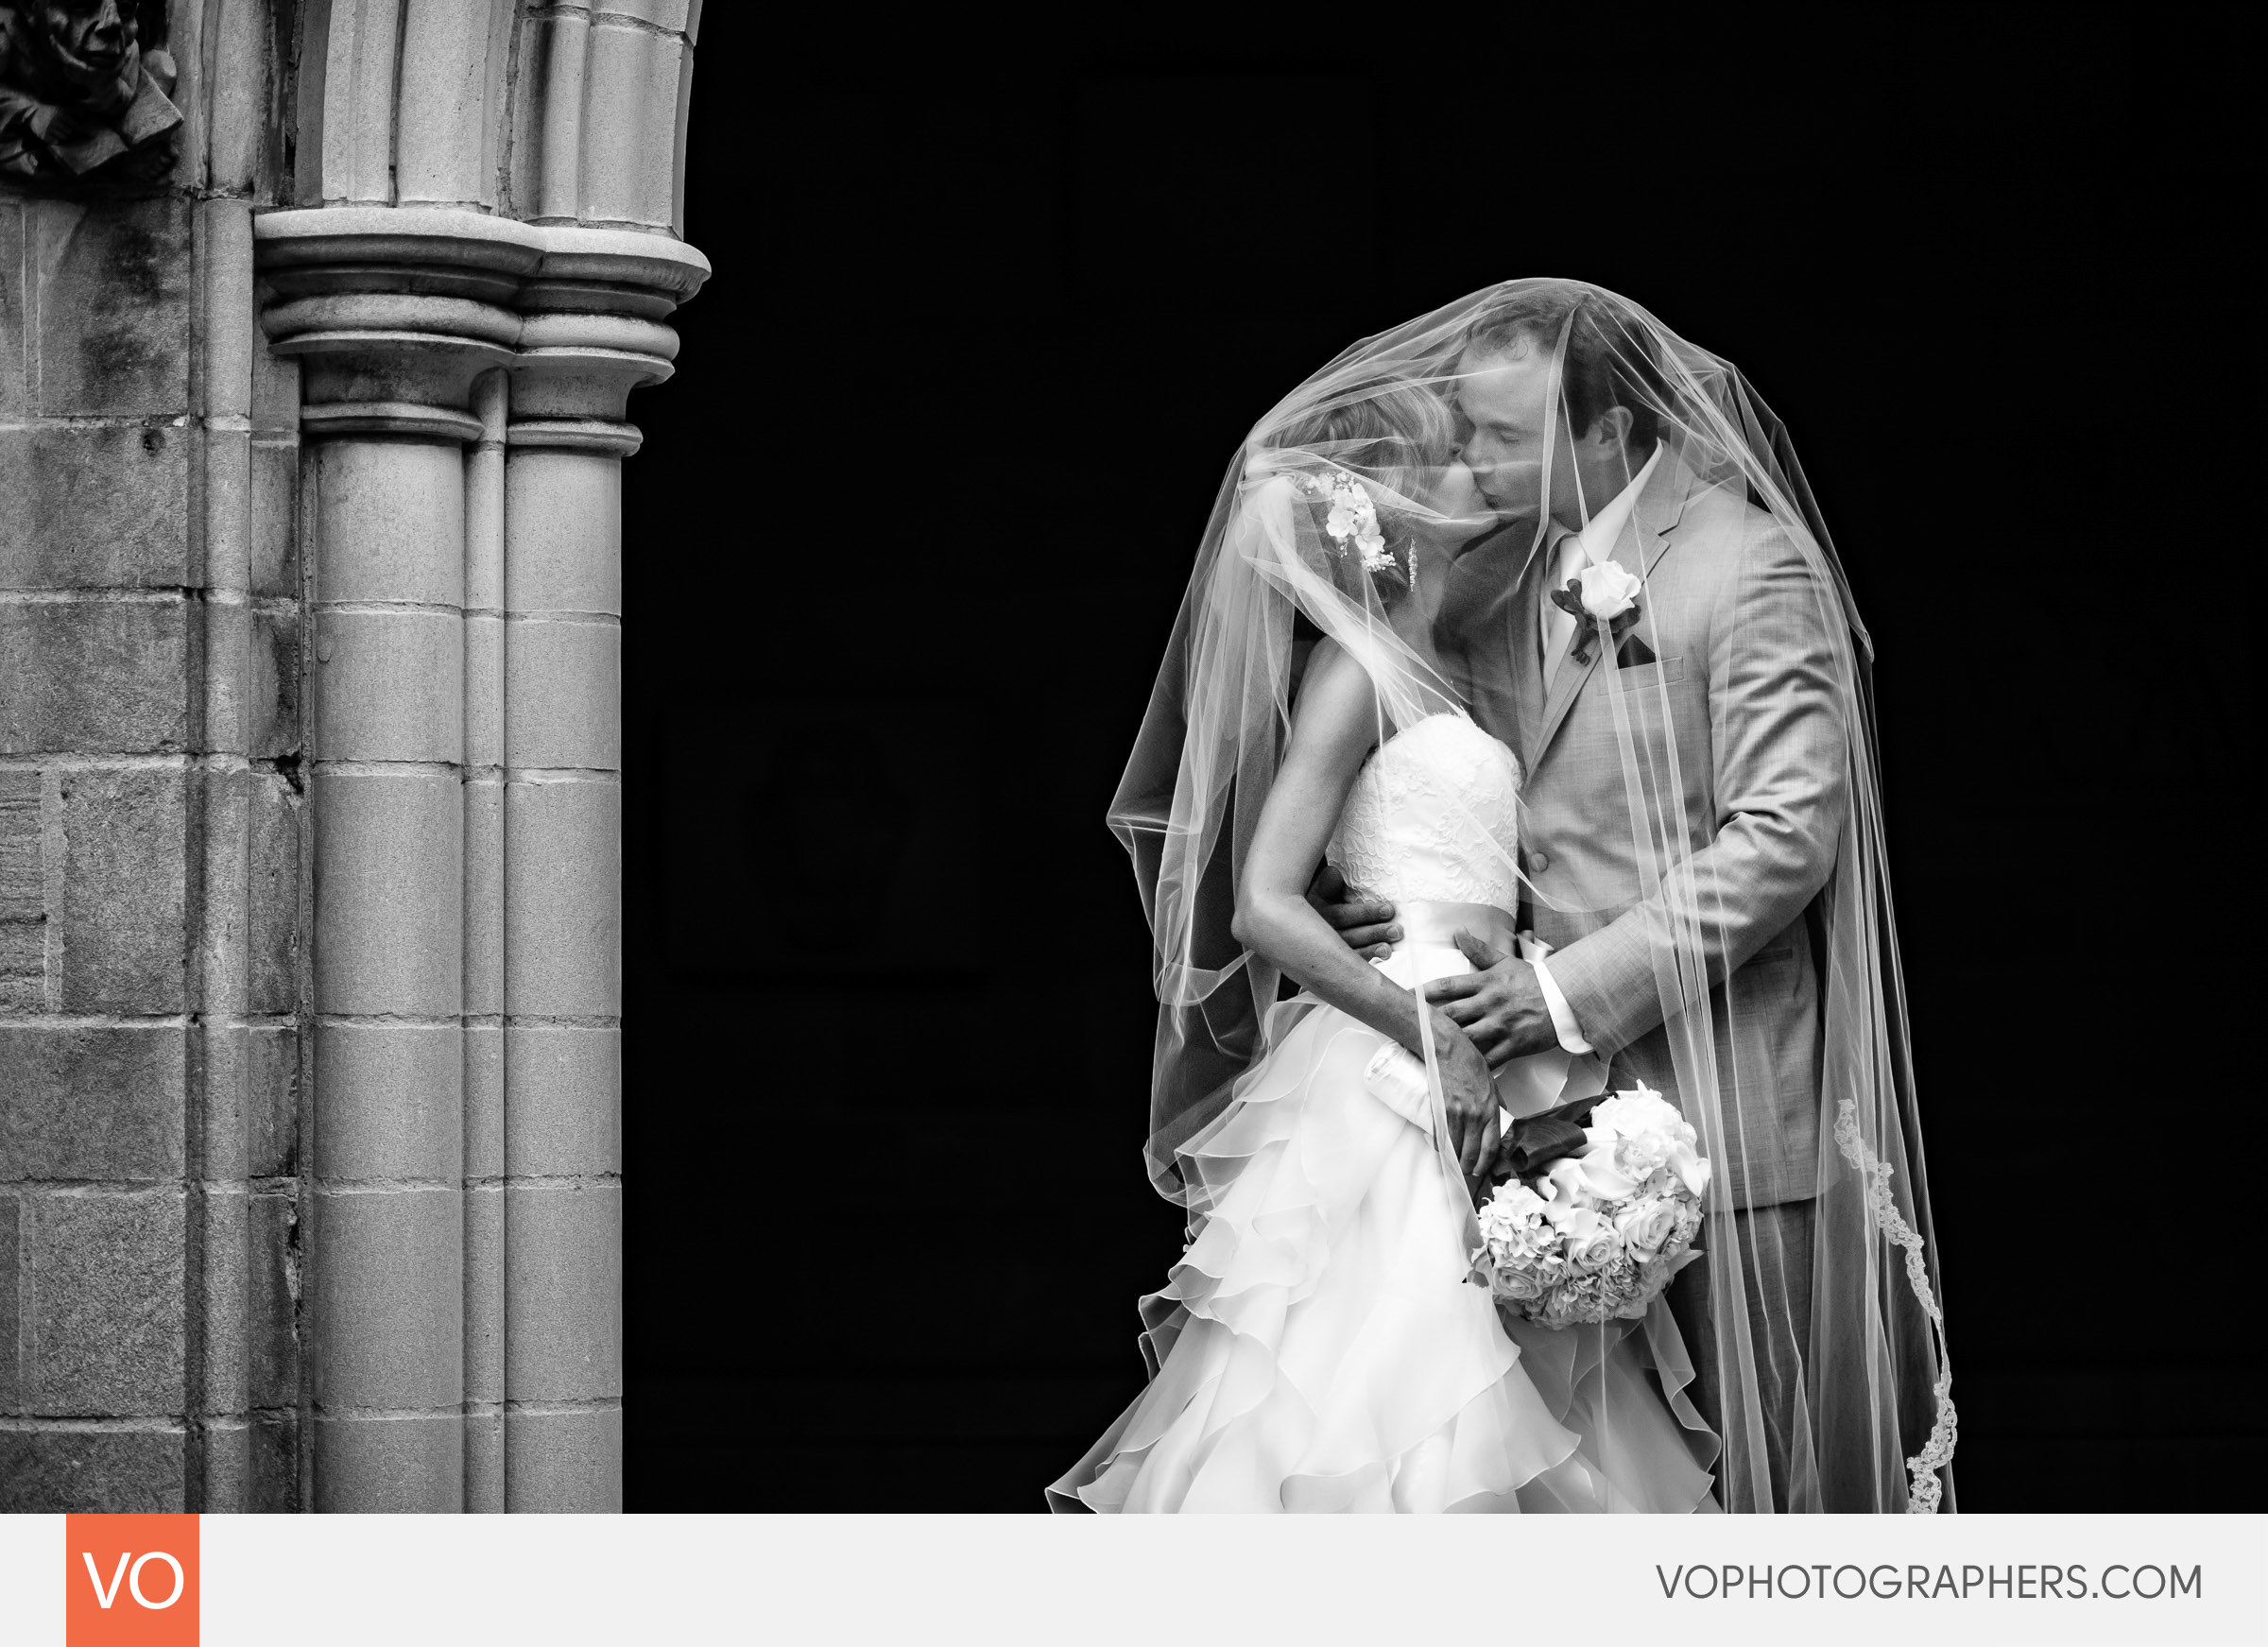 The couple under the Bride's veil